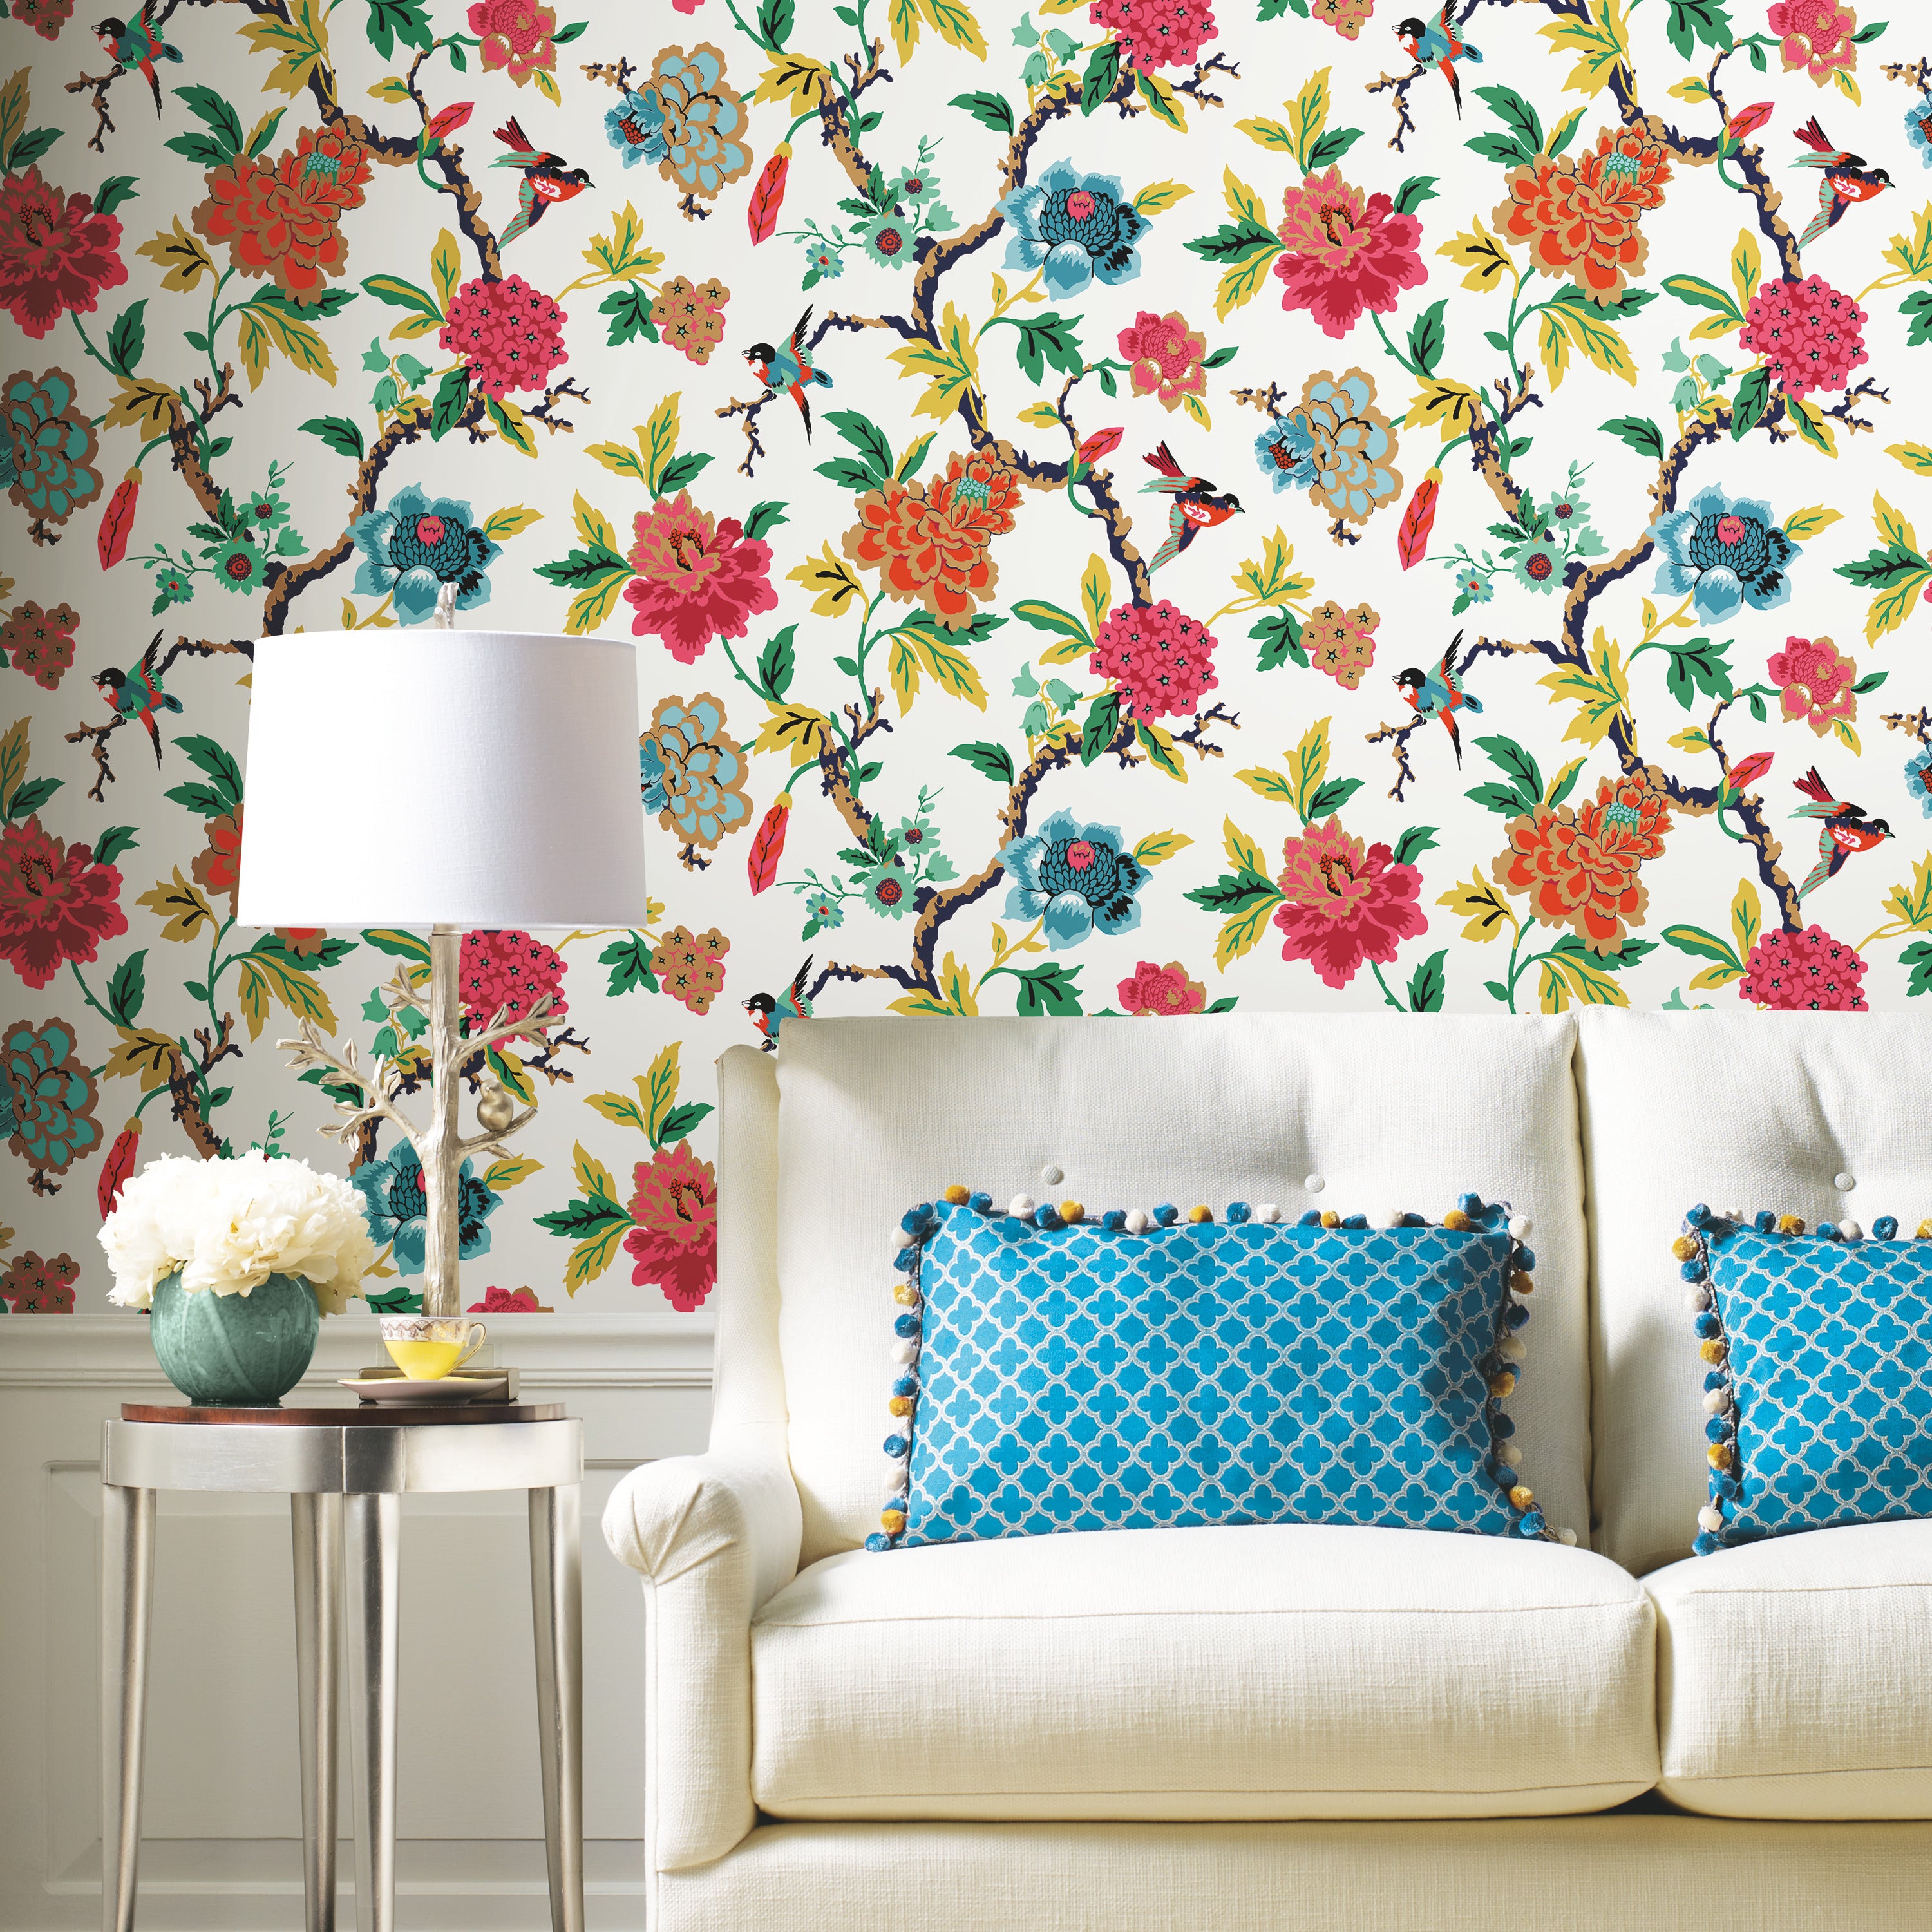 Leaves of Eucalyptus  floral wallpaper for bedroom in botanical design   watercolor 533071040  California Wallpaper